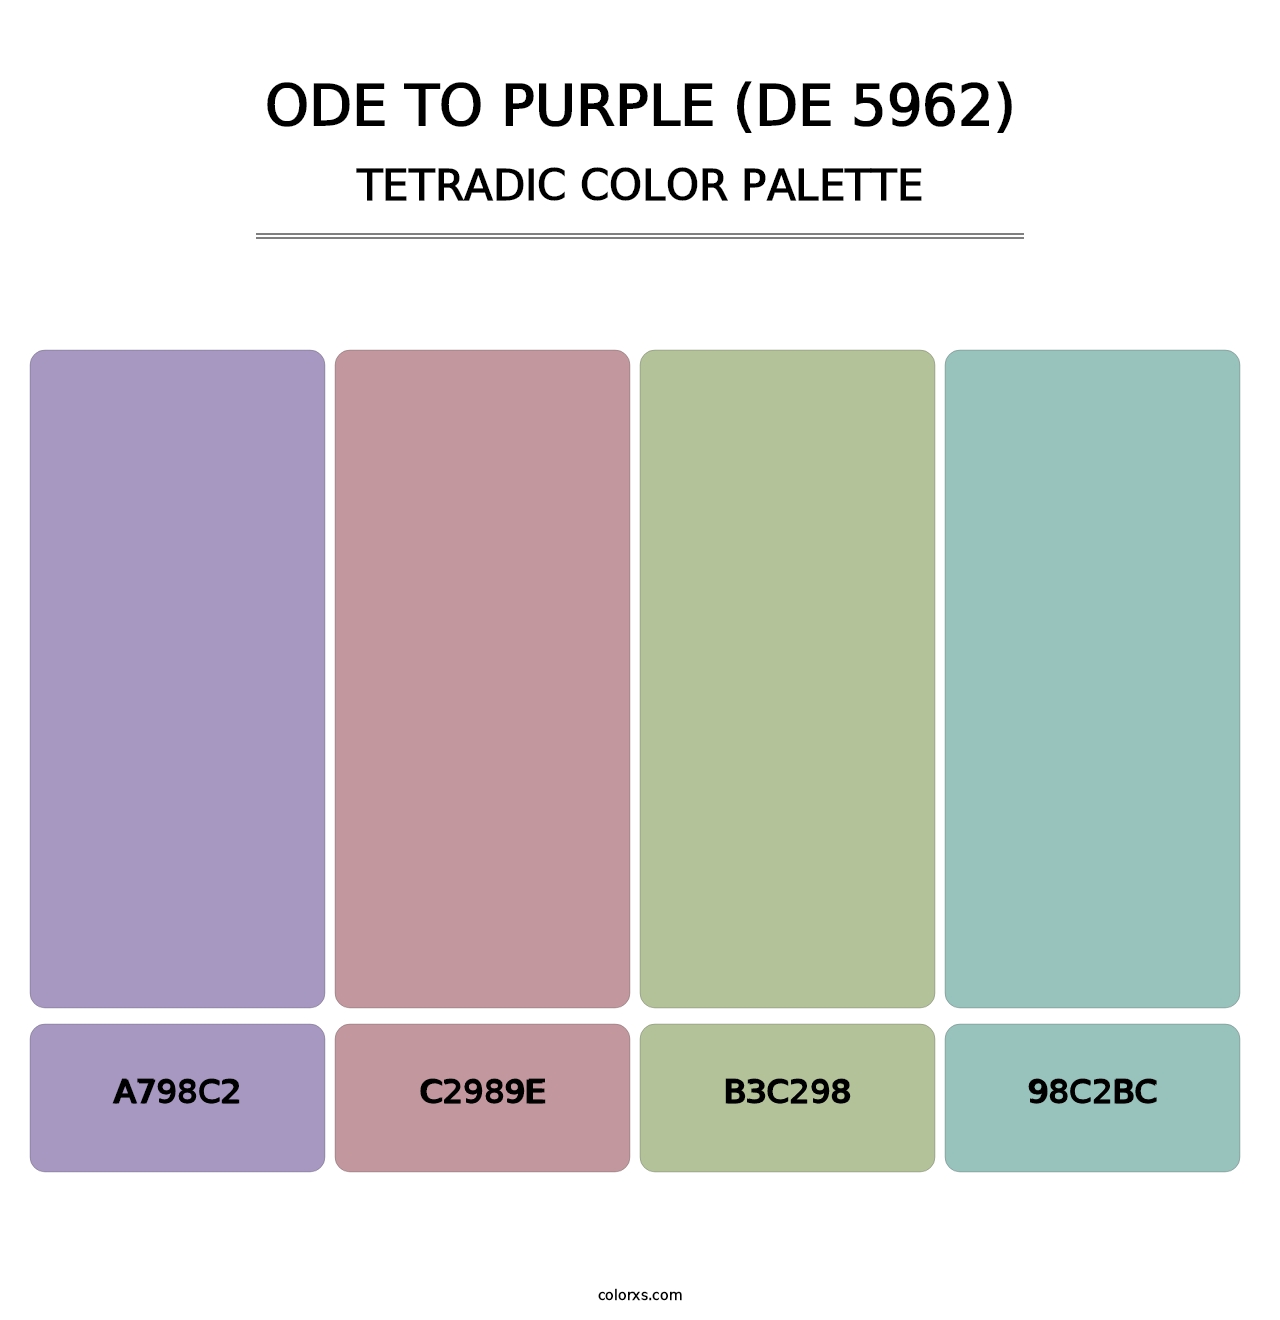 Ode to Purple (DE 5962) - Tetradic Color Palette